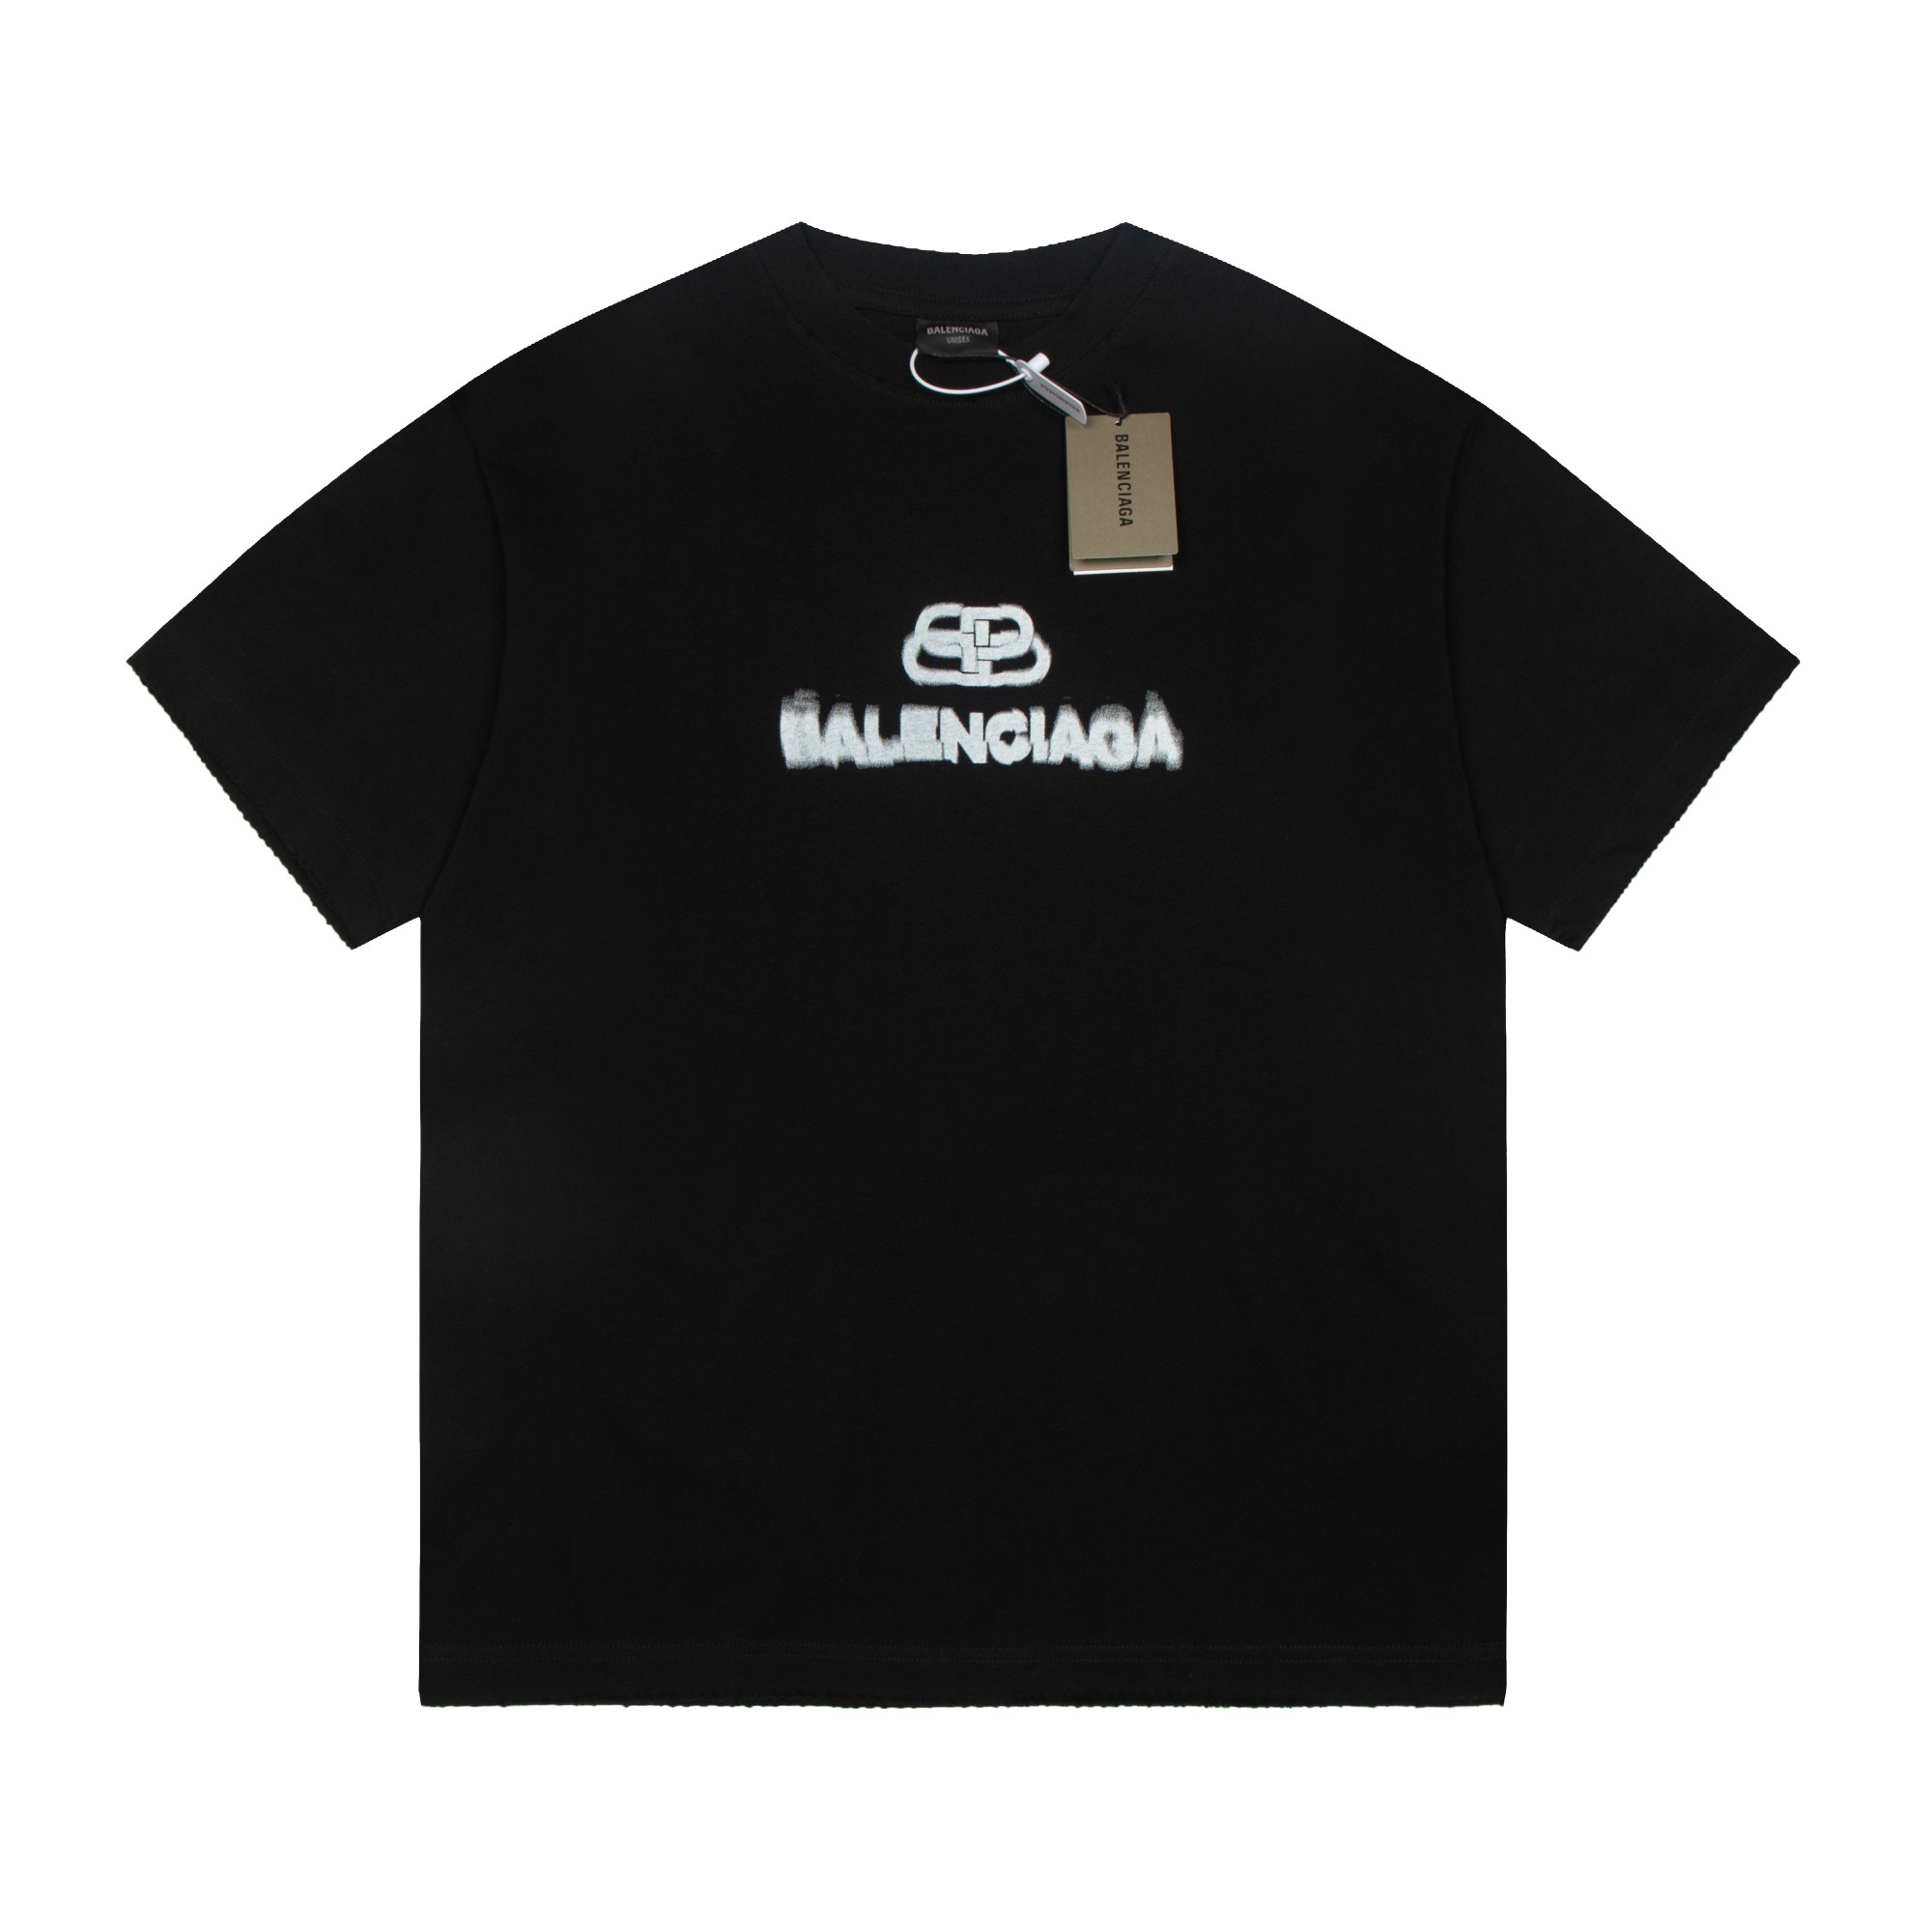 Balenciaga Clothing T-Shirt Printing Unisex Cotton Short Sleeve